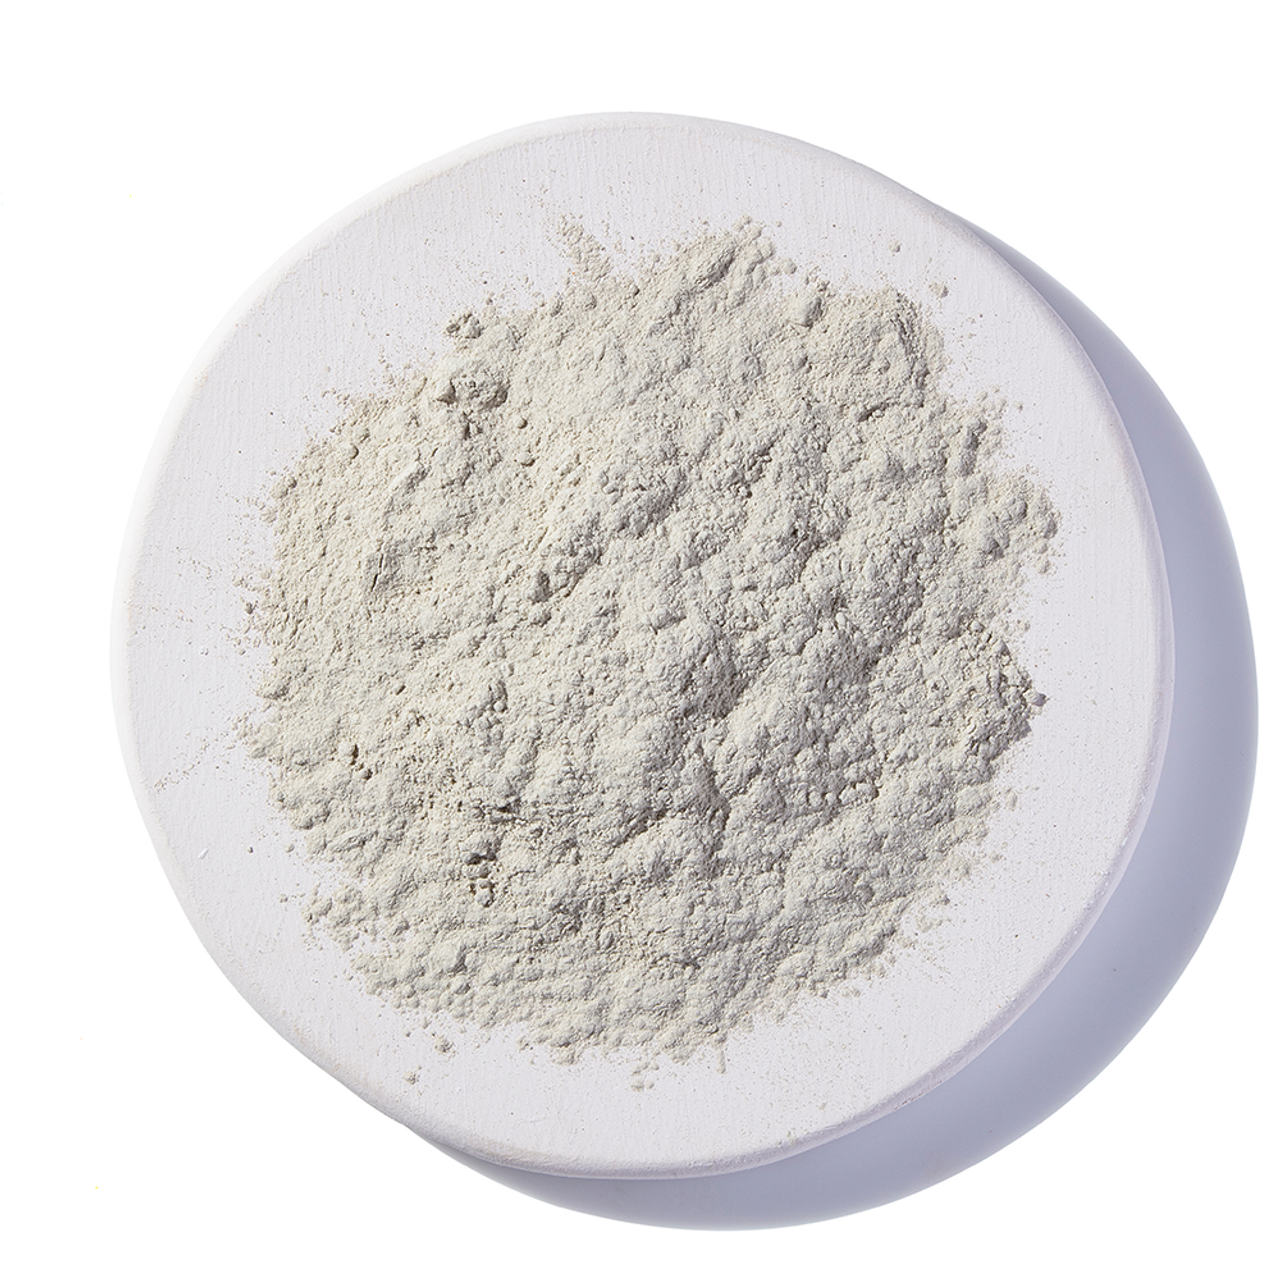  New York Biology Bentonite Clay Powder 1.25 lb – Deep